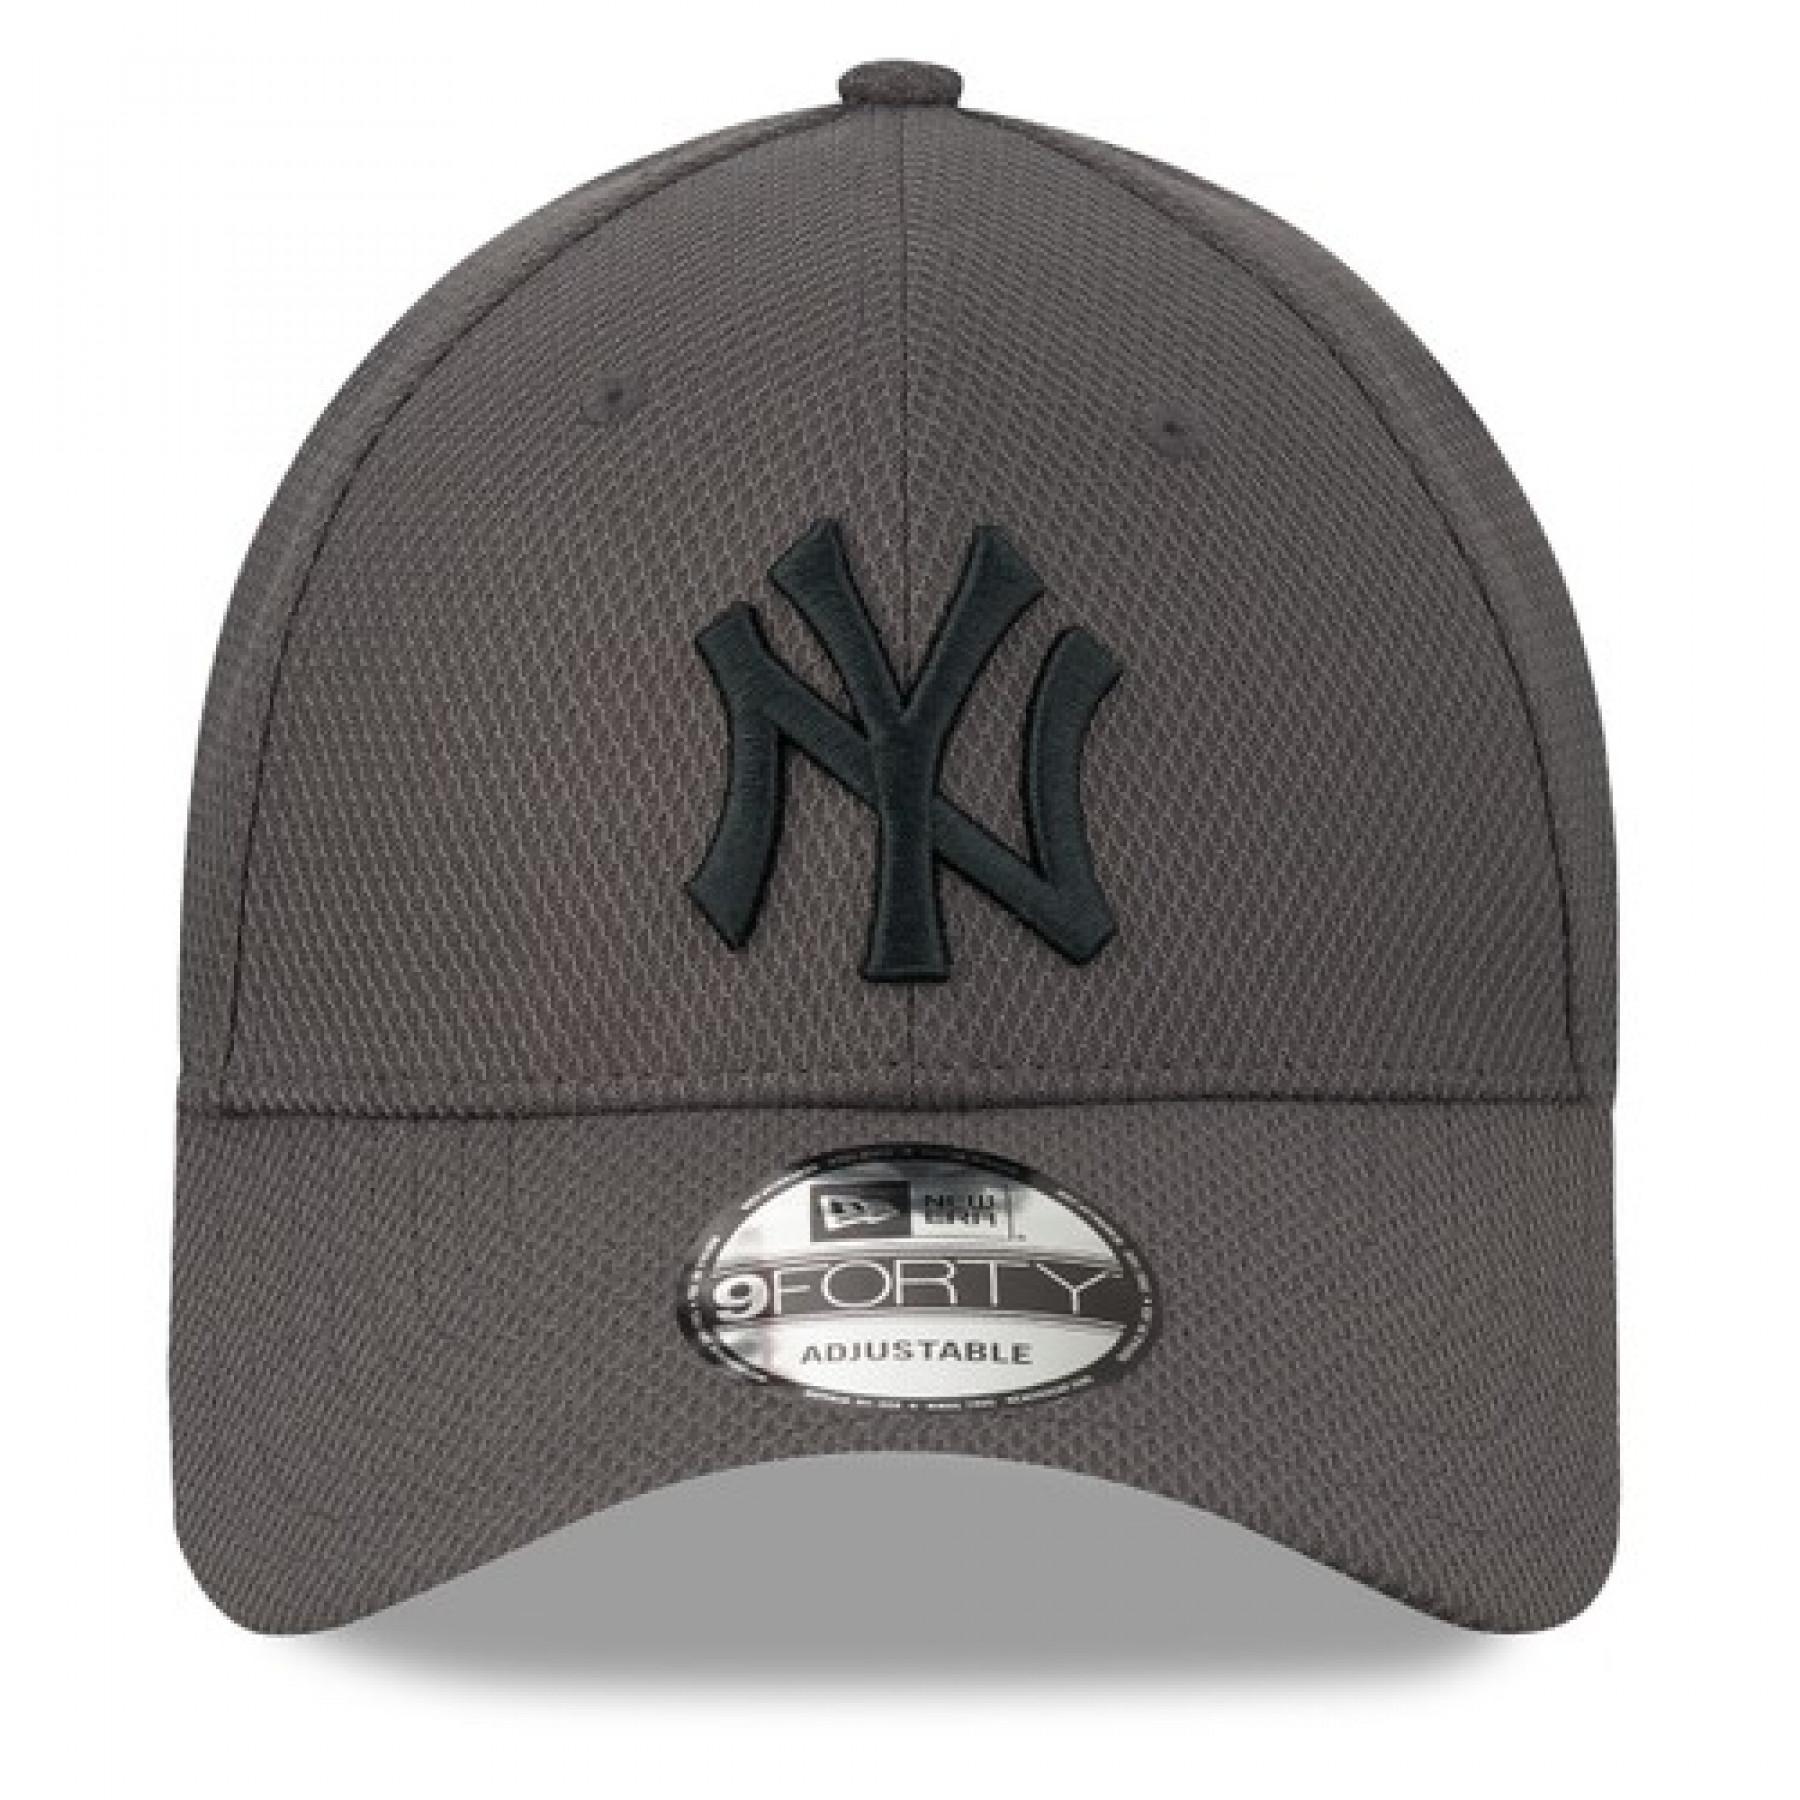 Kapsyl New Era Diamond Era 9forty New York Yankees Grhgrh